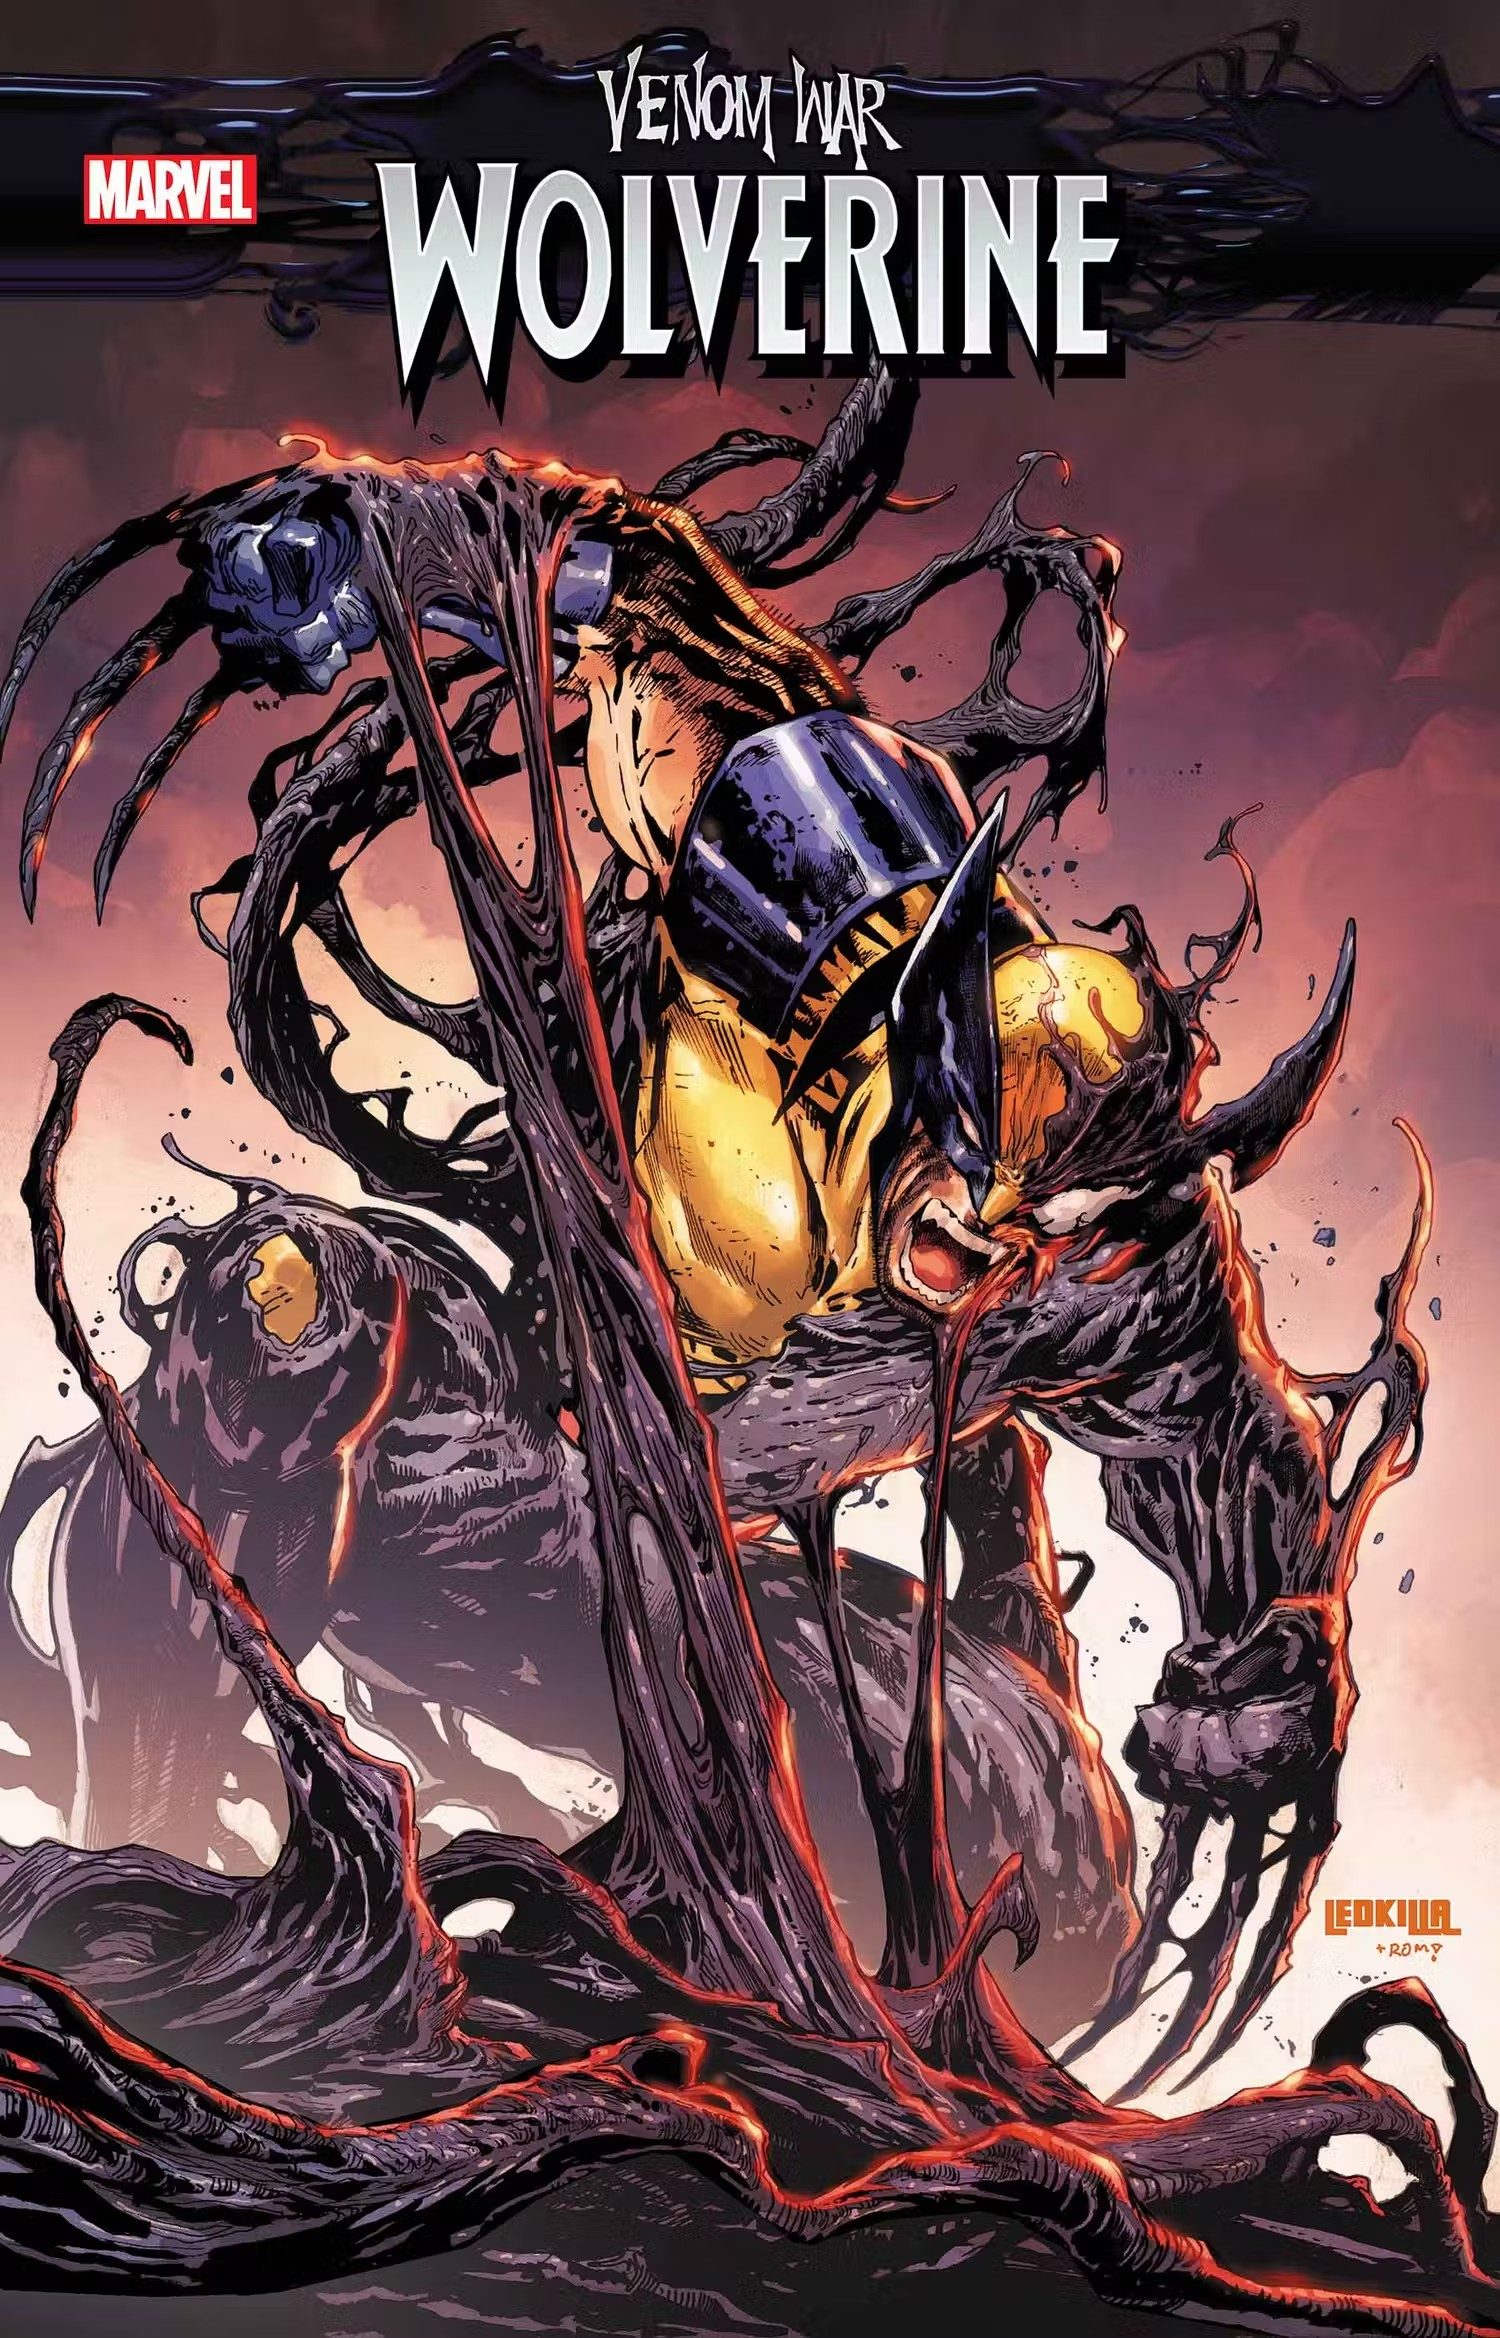 Signature Series: Venom War Wolverine #1-3 Signed by Tony Fleecs